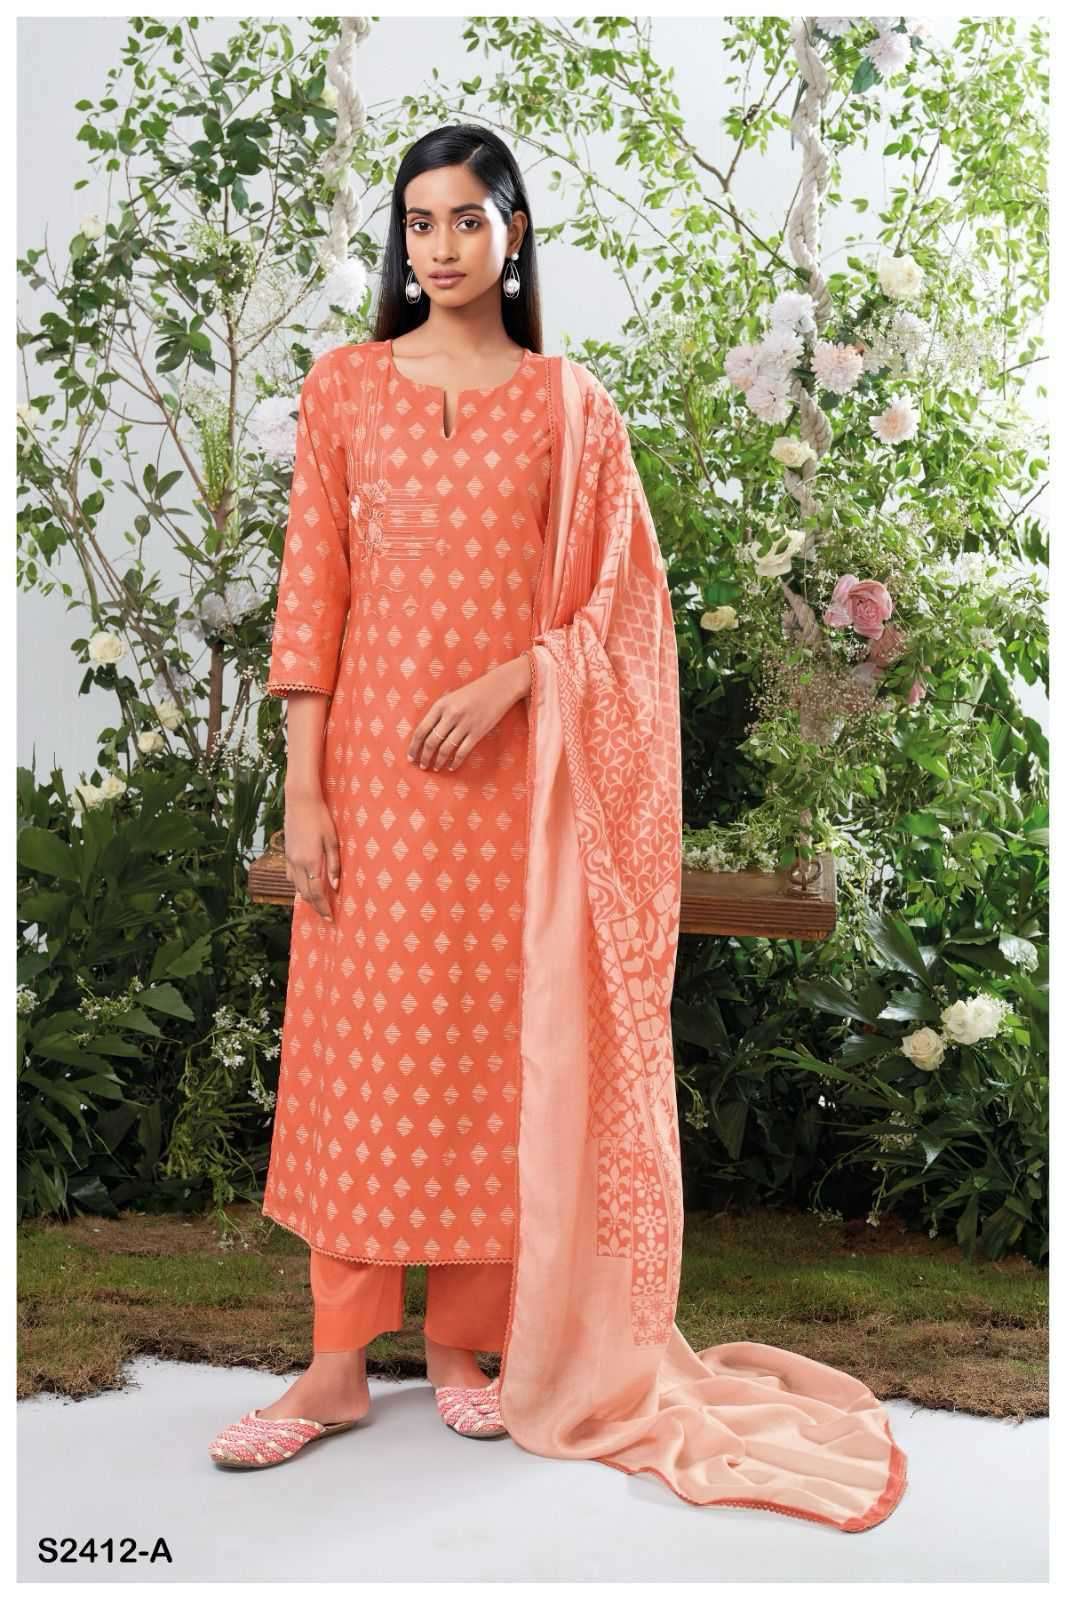 Ganga WILMER 2412 Dress Materials Wholesale market in india